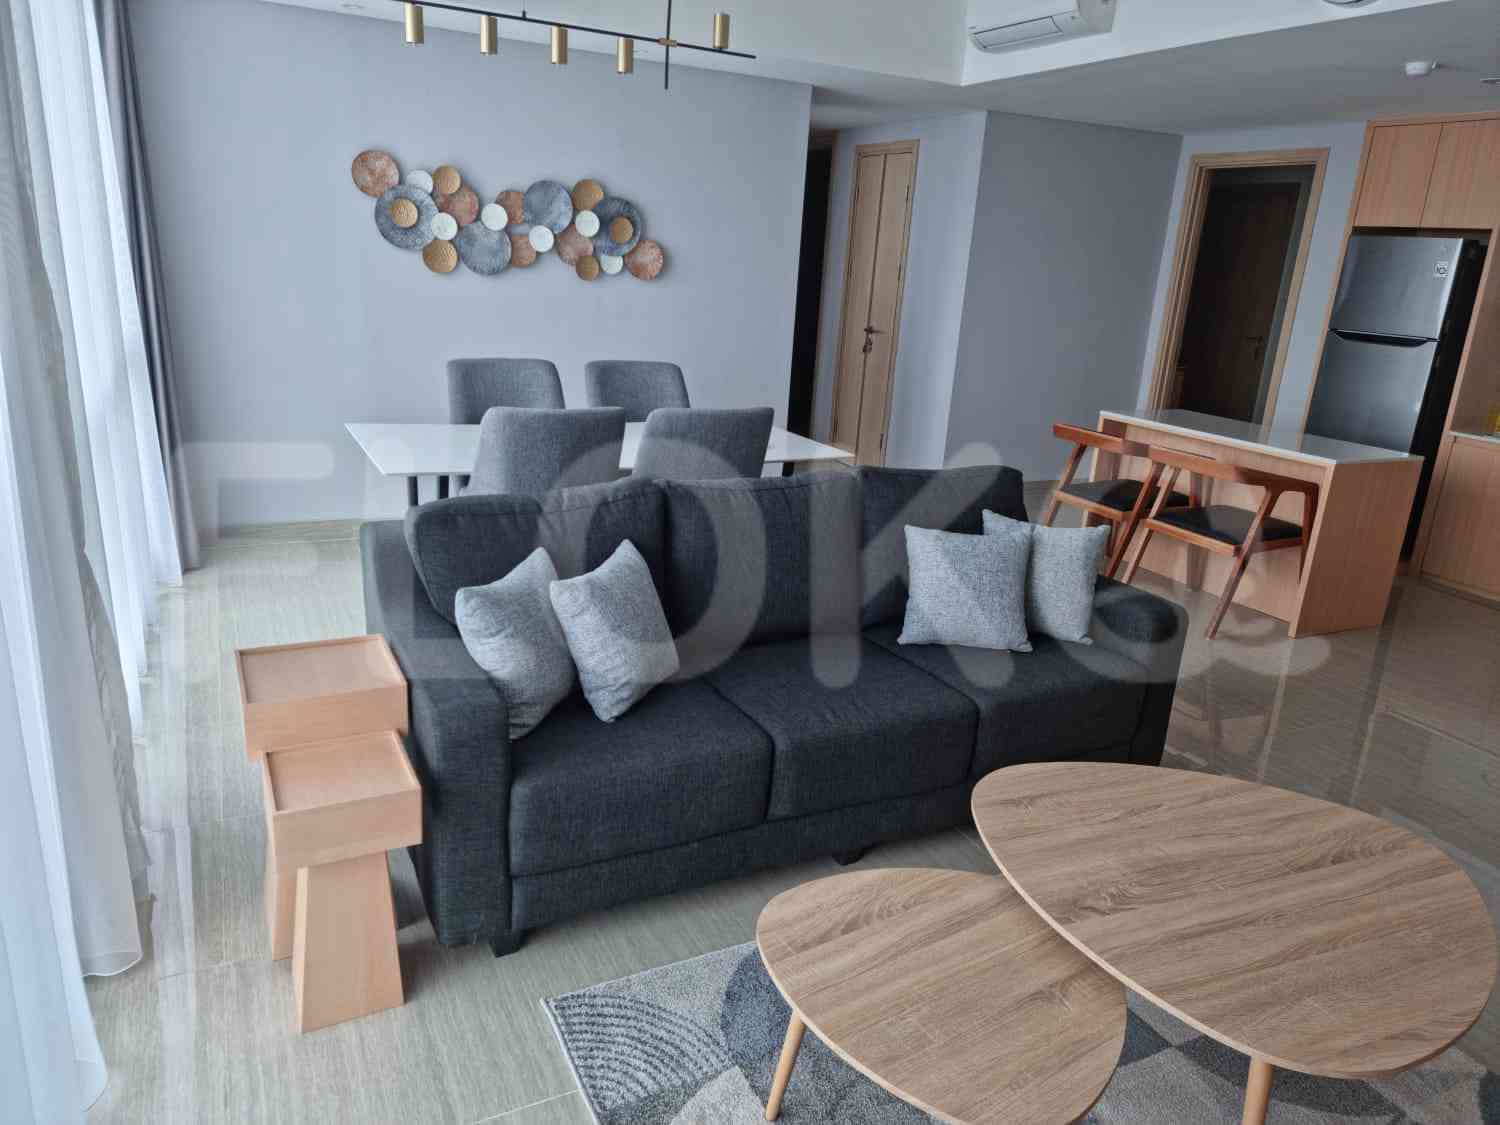 2 Bedroom on 22nd Floor for Rent in Millenium Village Apartment - fkad74 5